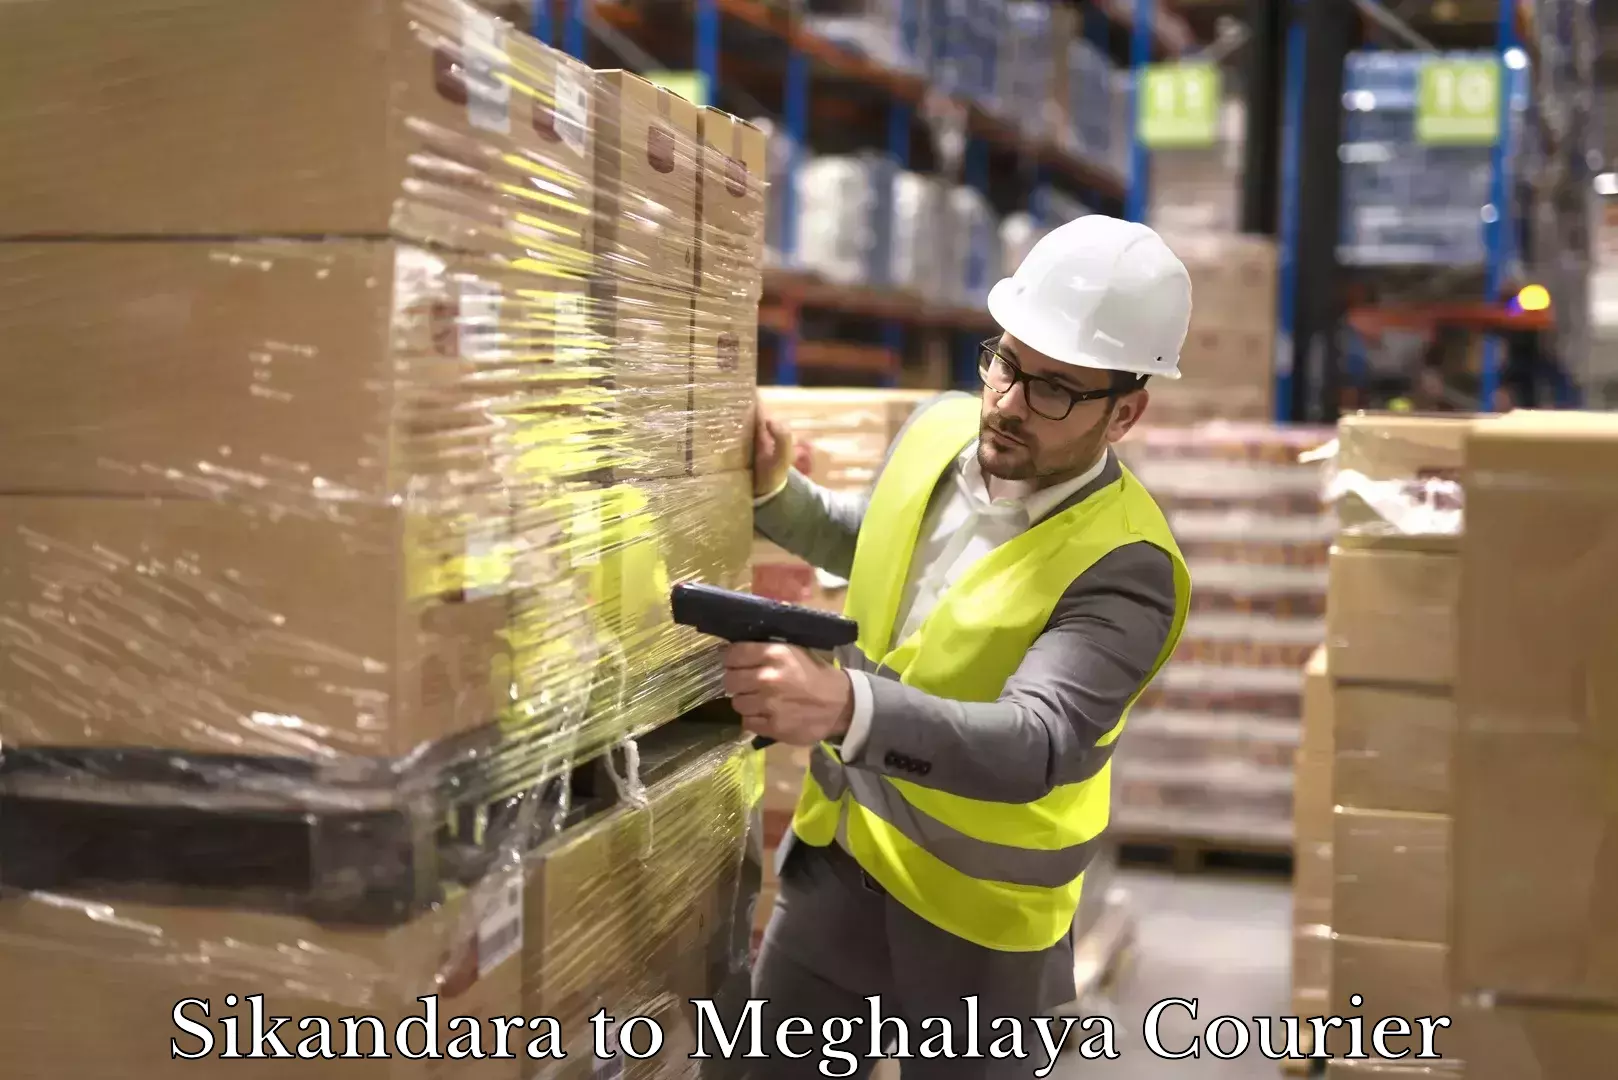 Courier service booking Sikandara to Meghalaya